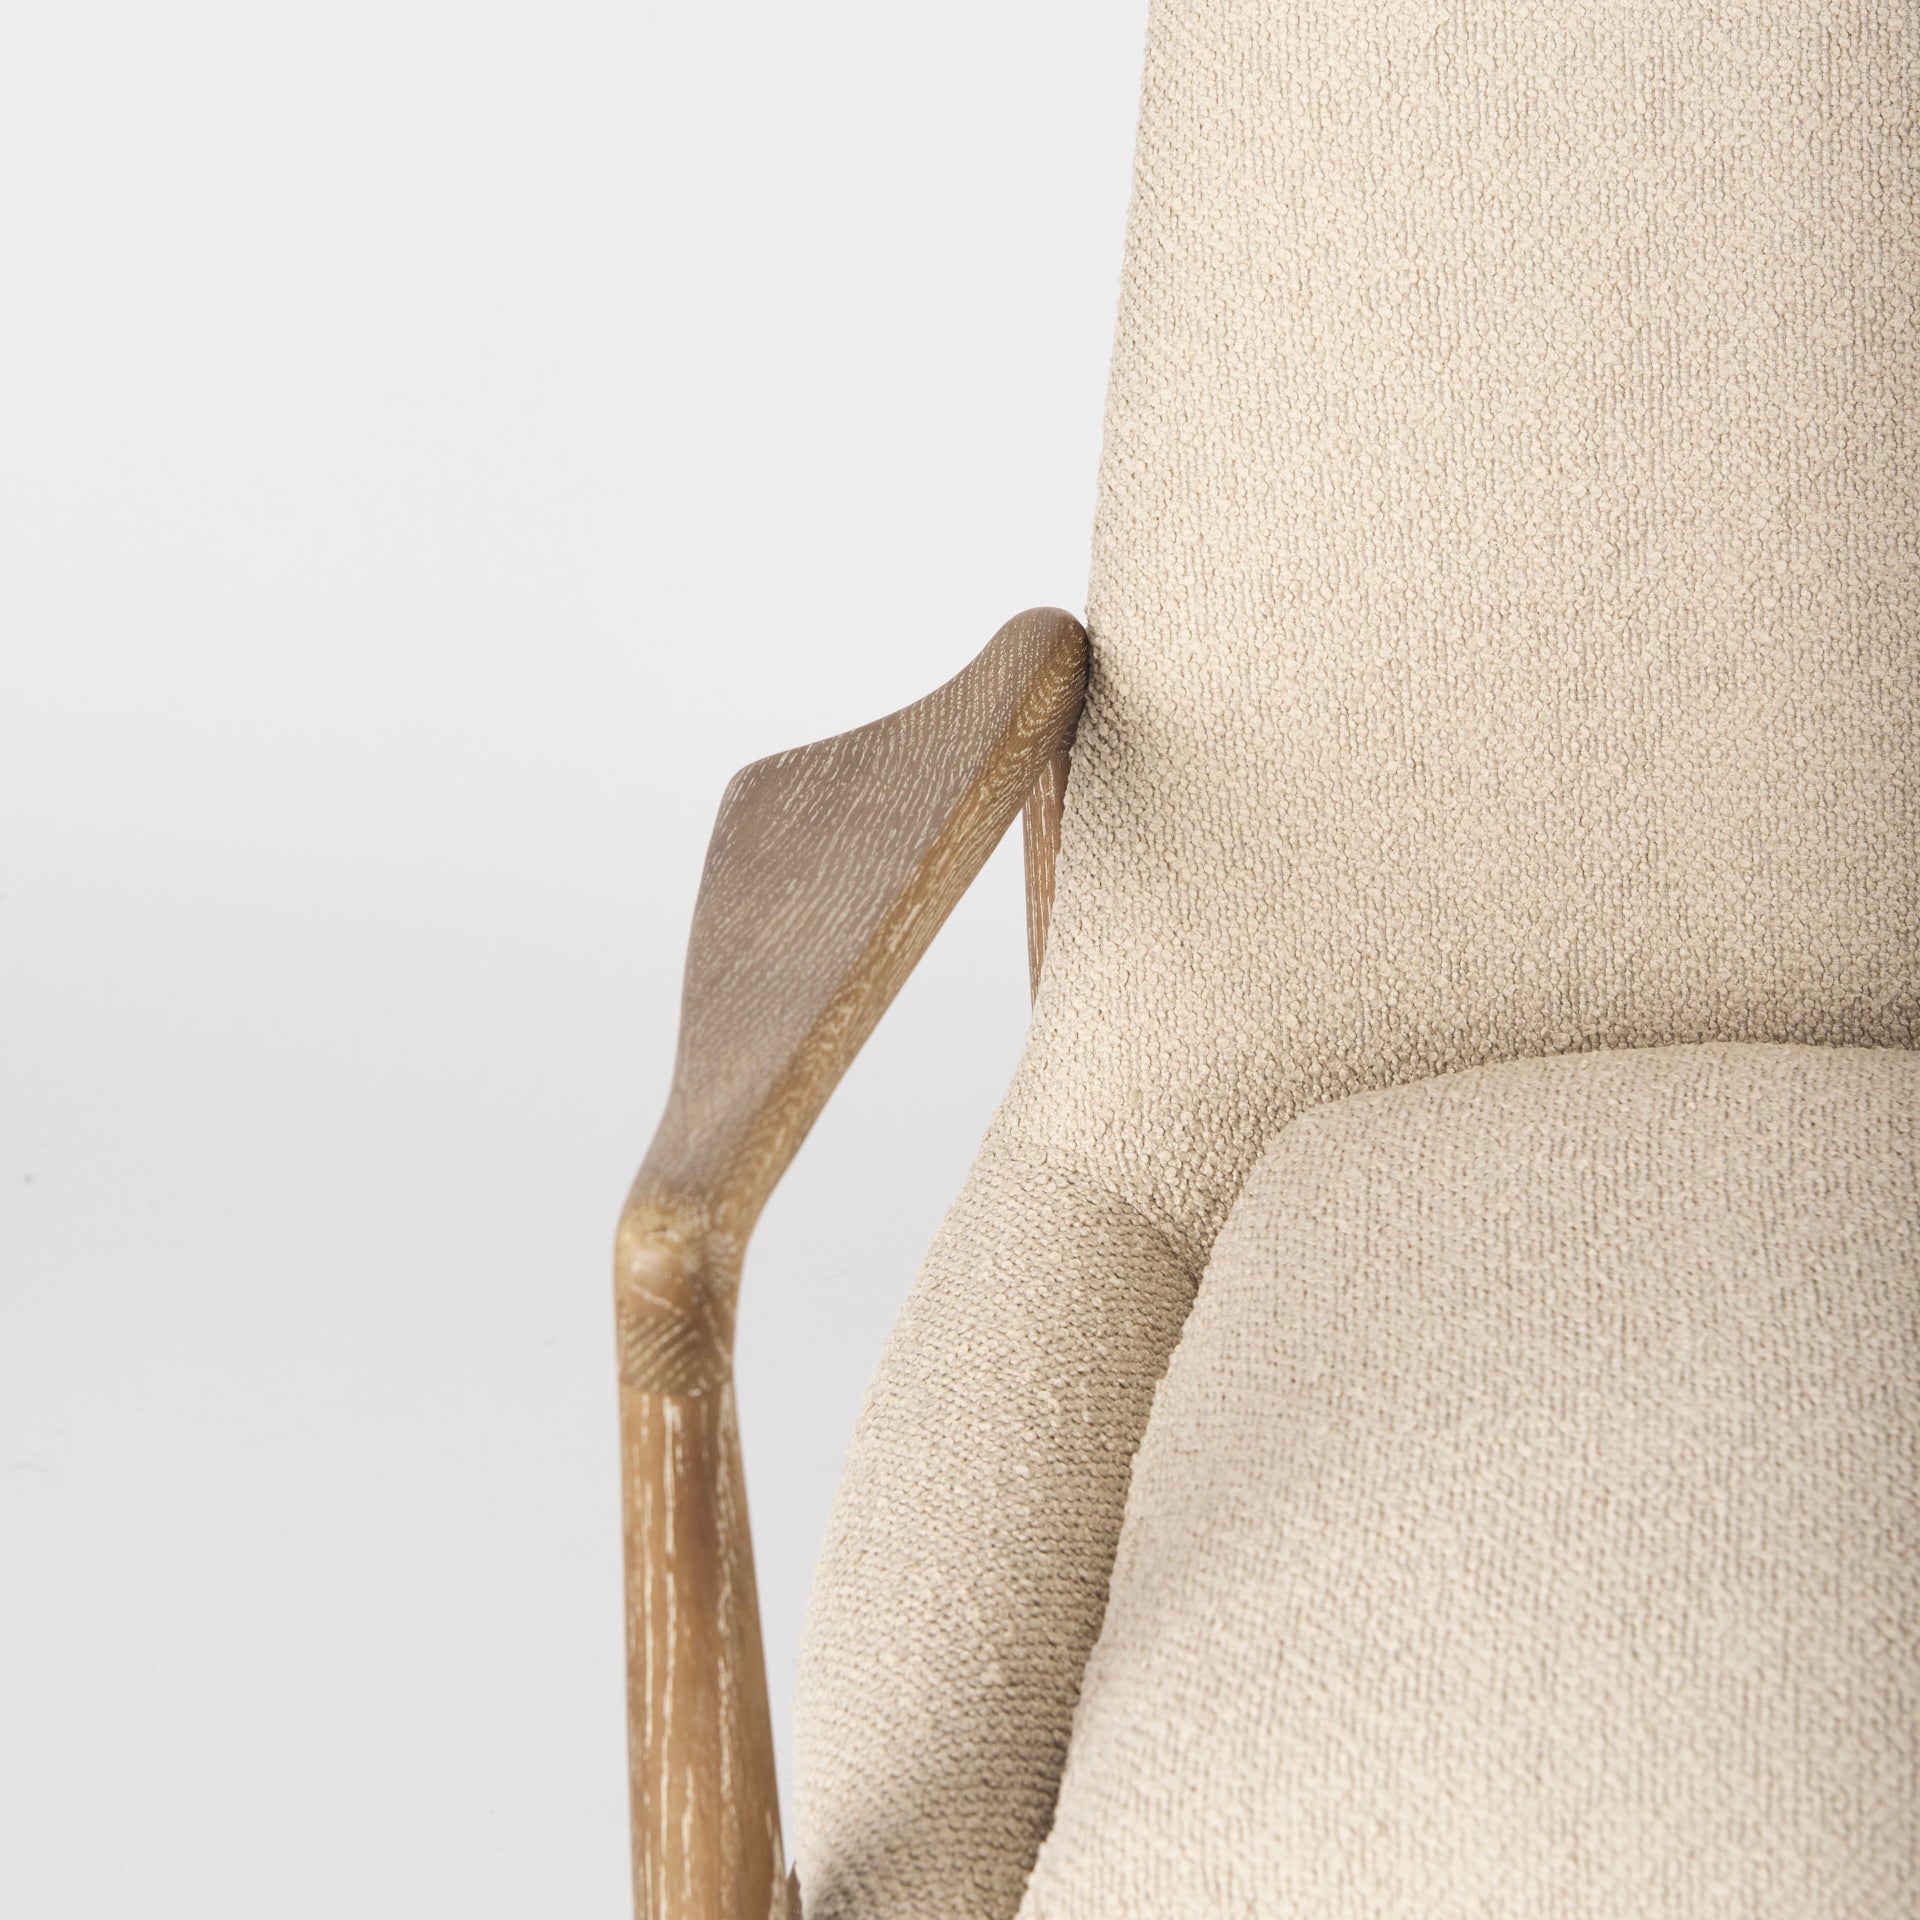 Westan Accent Chair - Cream Boucle